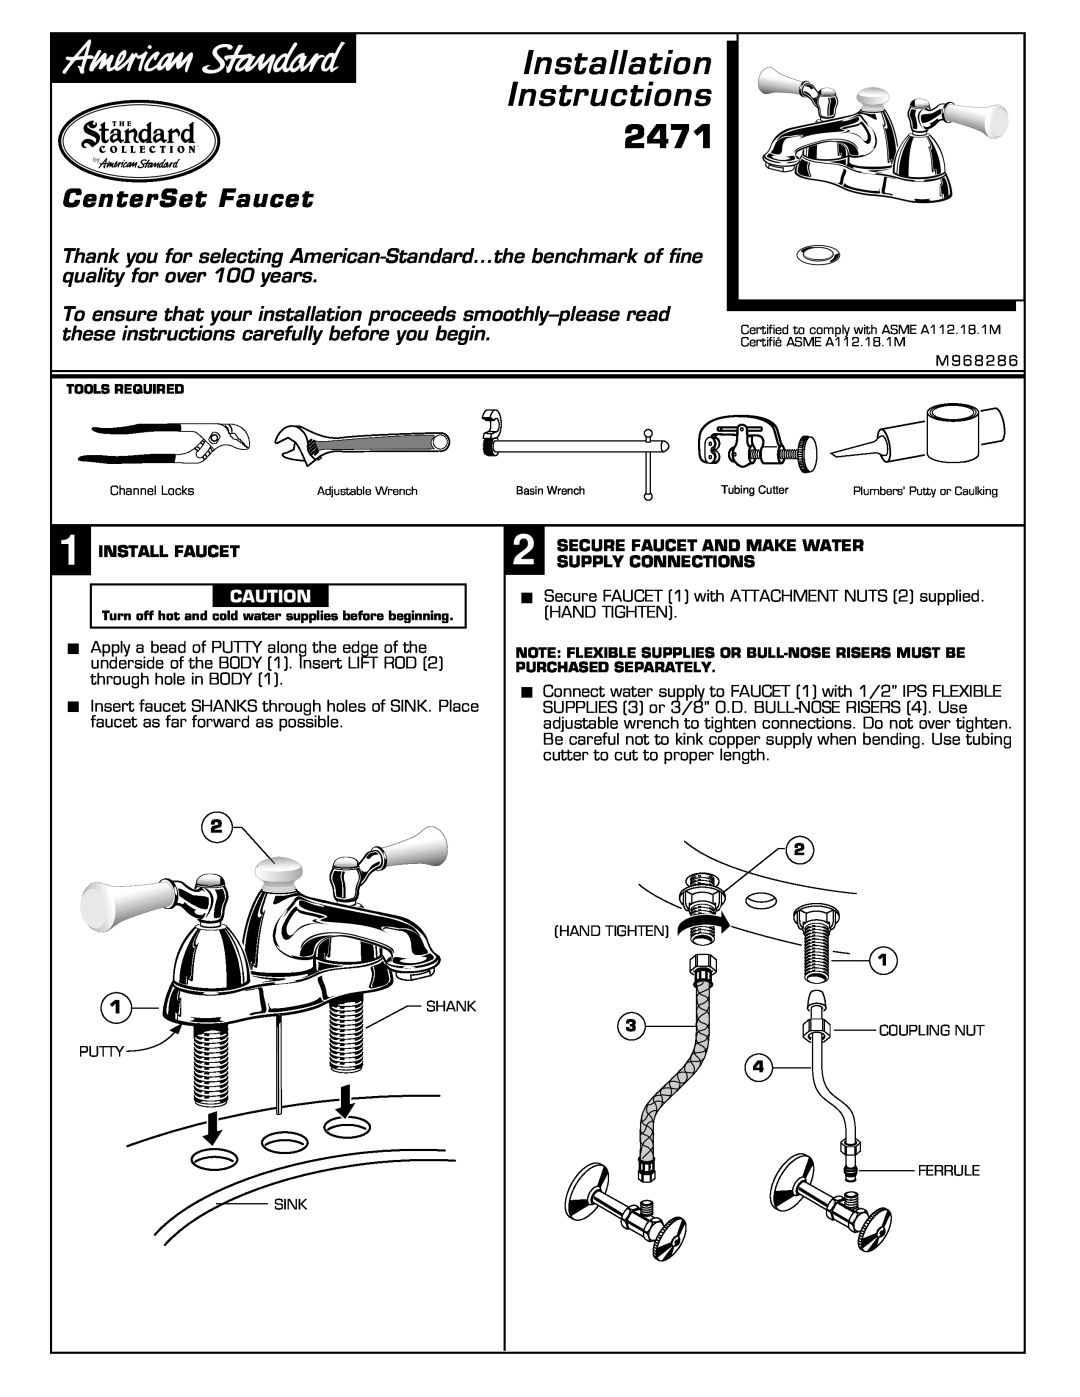 American Standard 2471 installation instructions CenterSet Faucet, Installation Instructions 